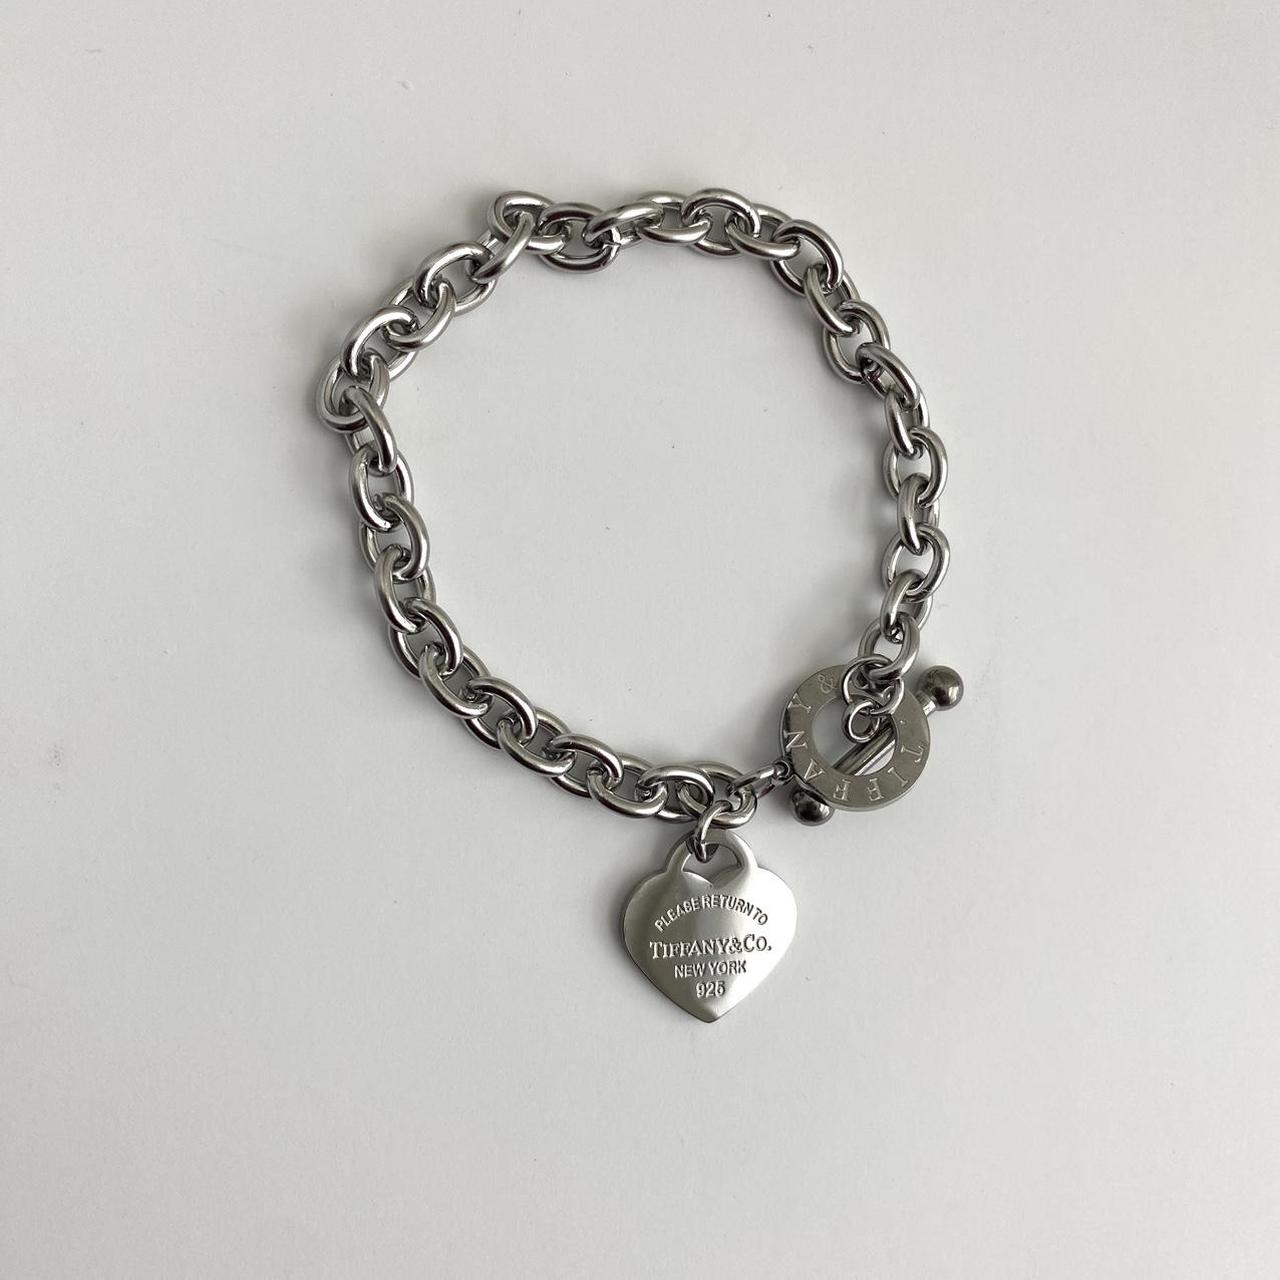 Tiffany & Co. Repurposed Silver Toggle Bracelet 7... - Depop